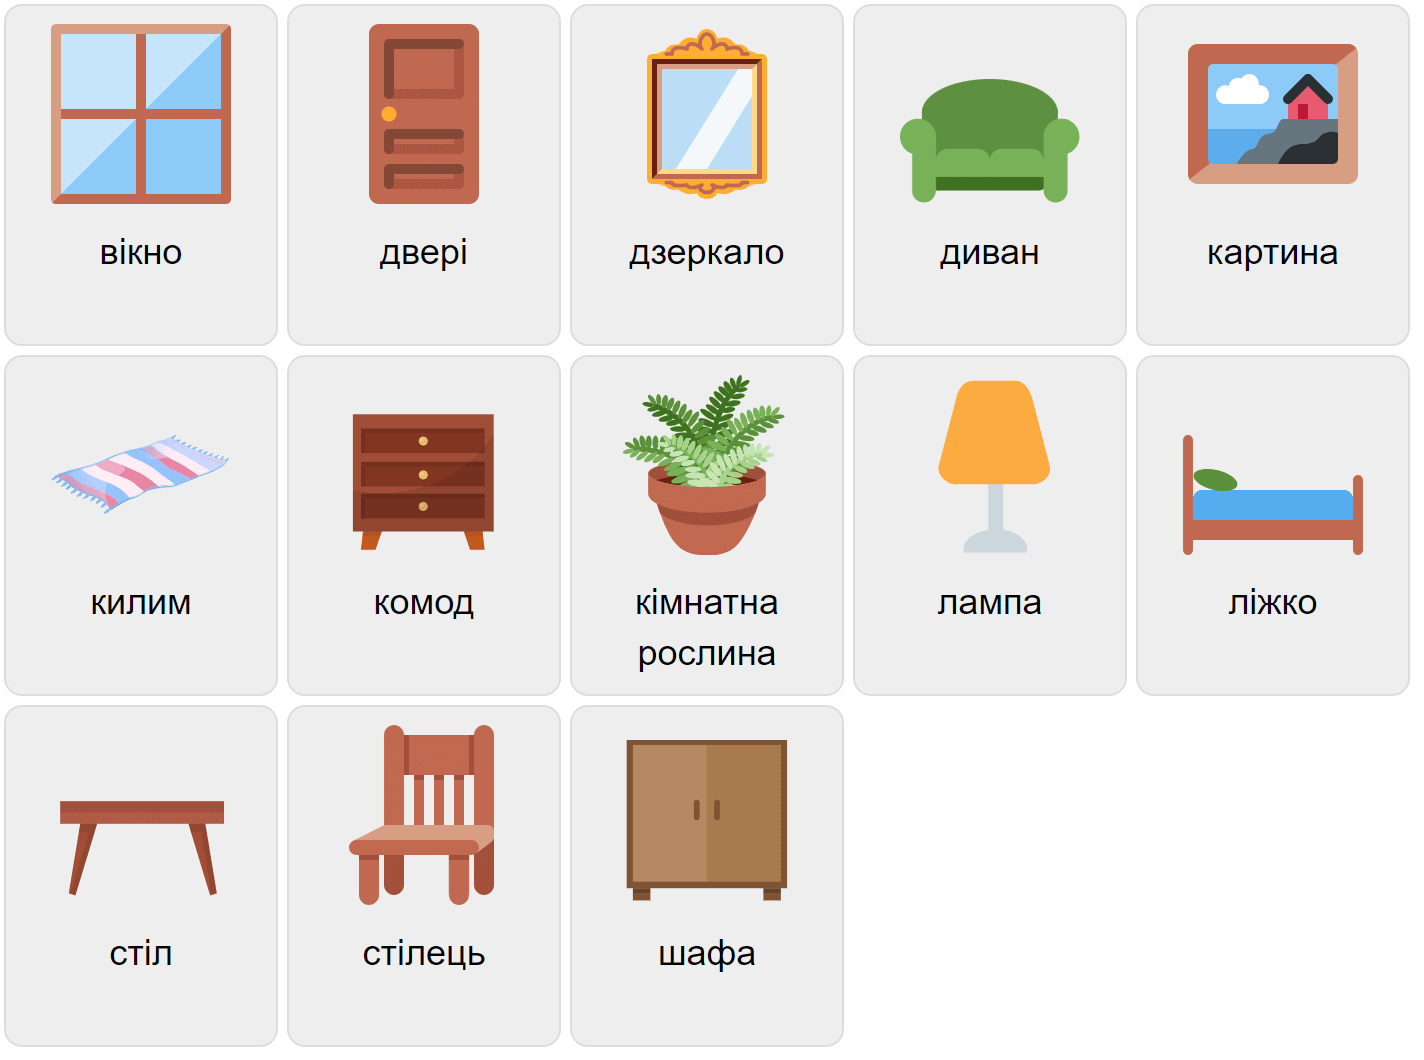 Furniture in Ukrainian